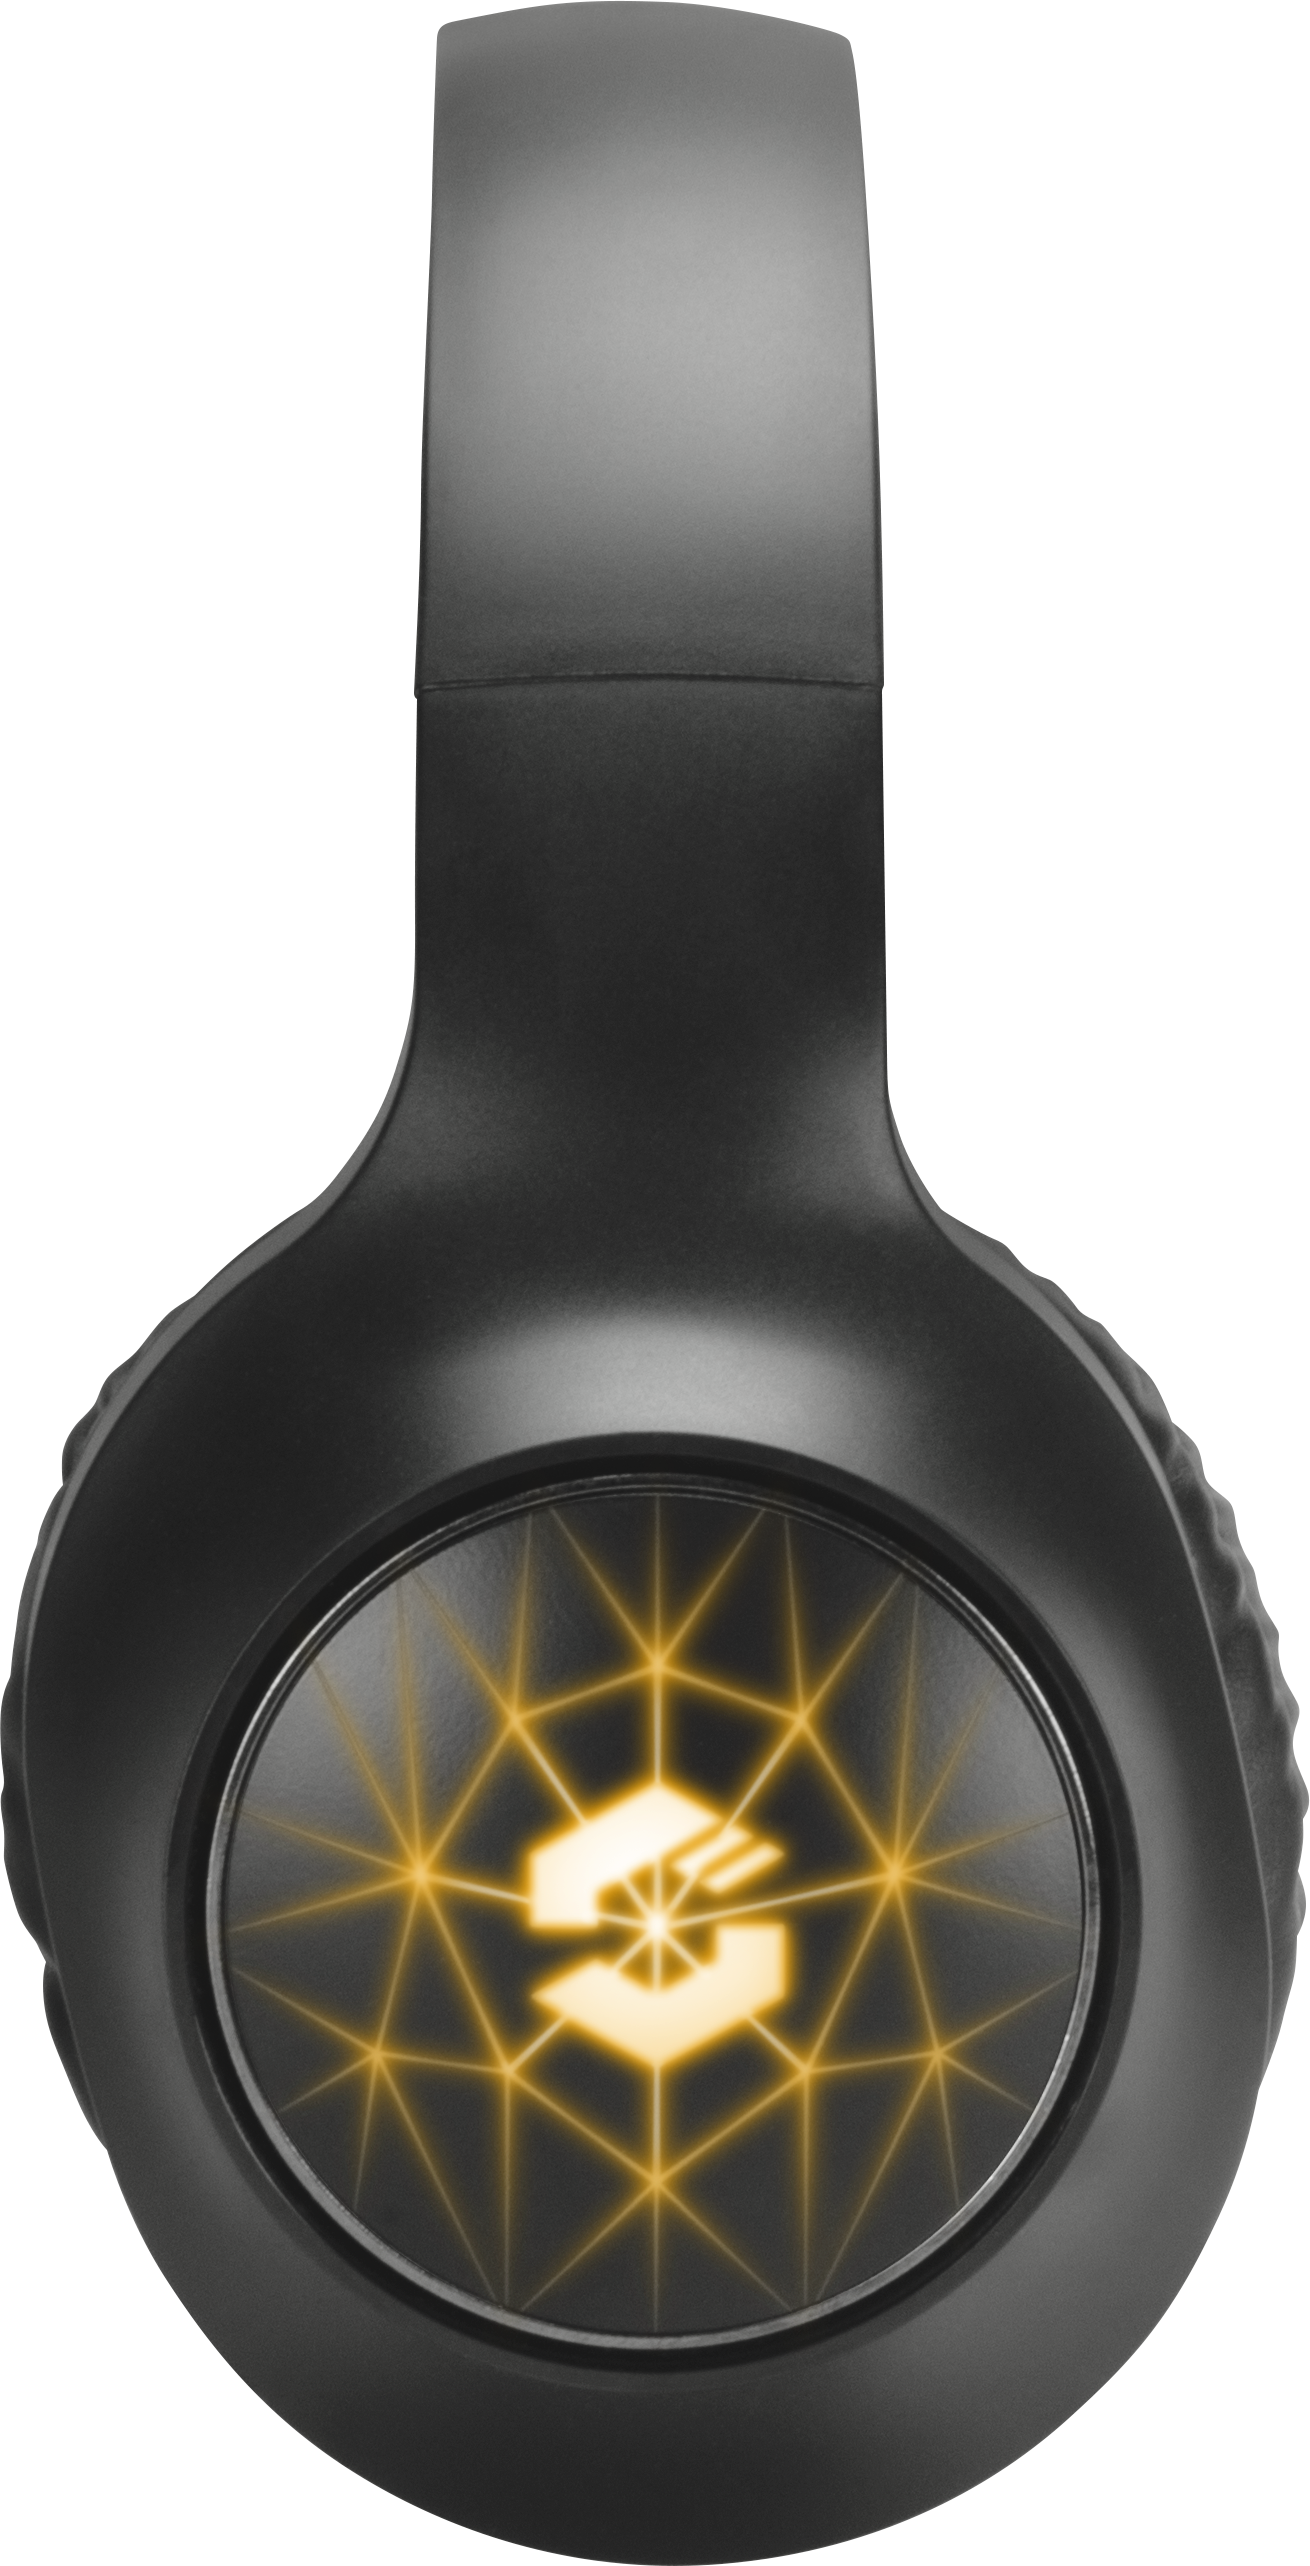 VIRTAS Beleuchtetes 7.1 Gaming Headset, schwarz